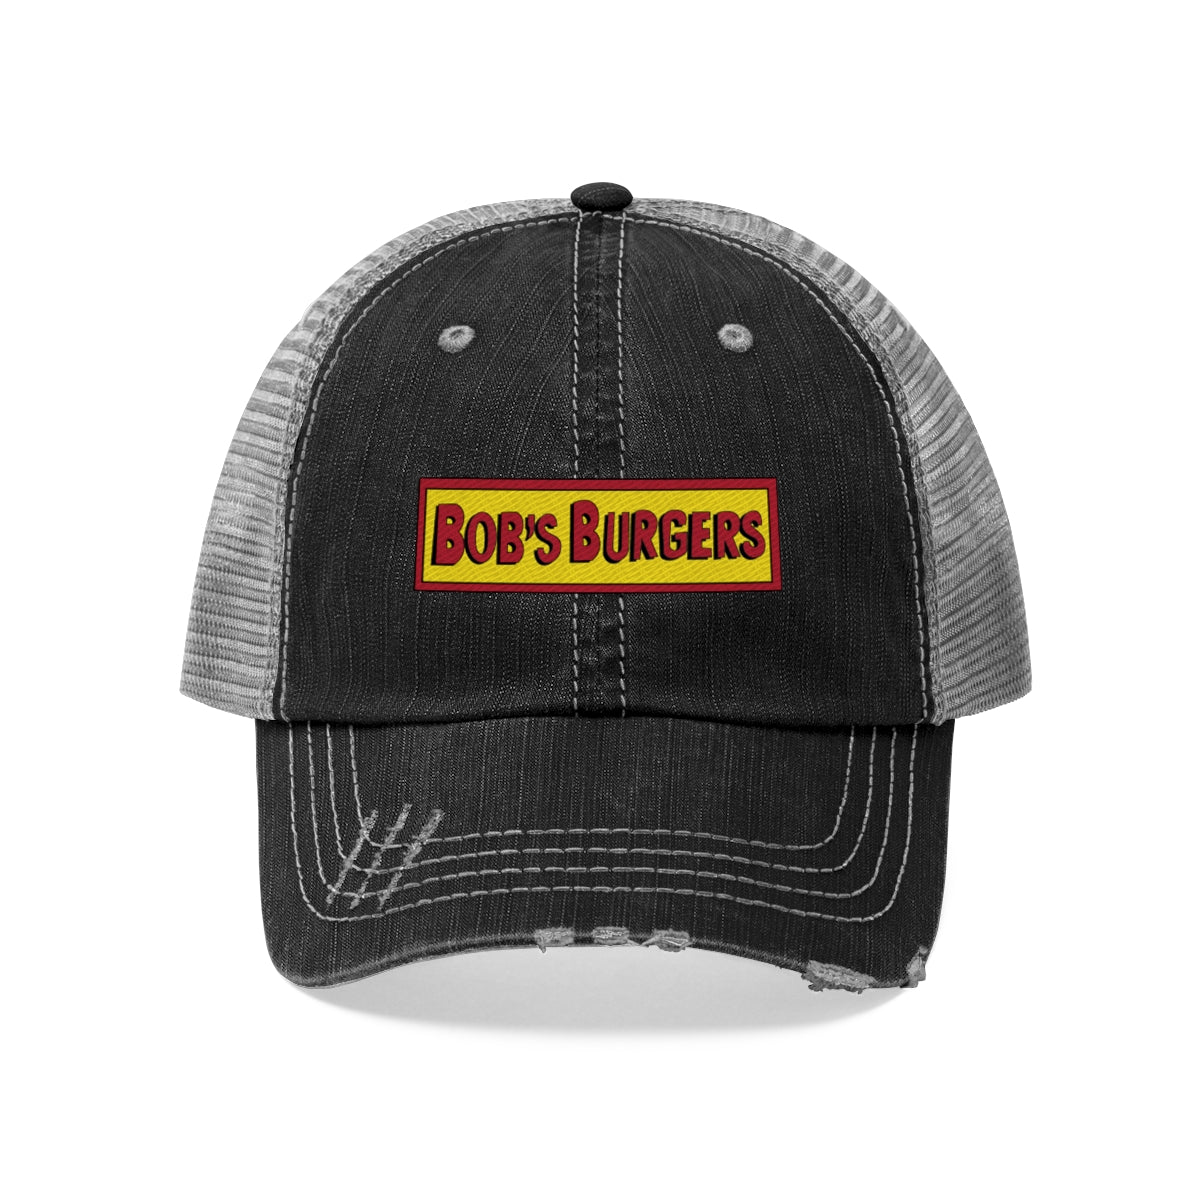 Bob's Burgers Embroidered Trucker Hat - Just Like Bob Bob's Burgers